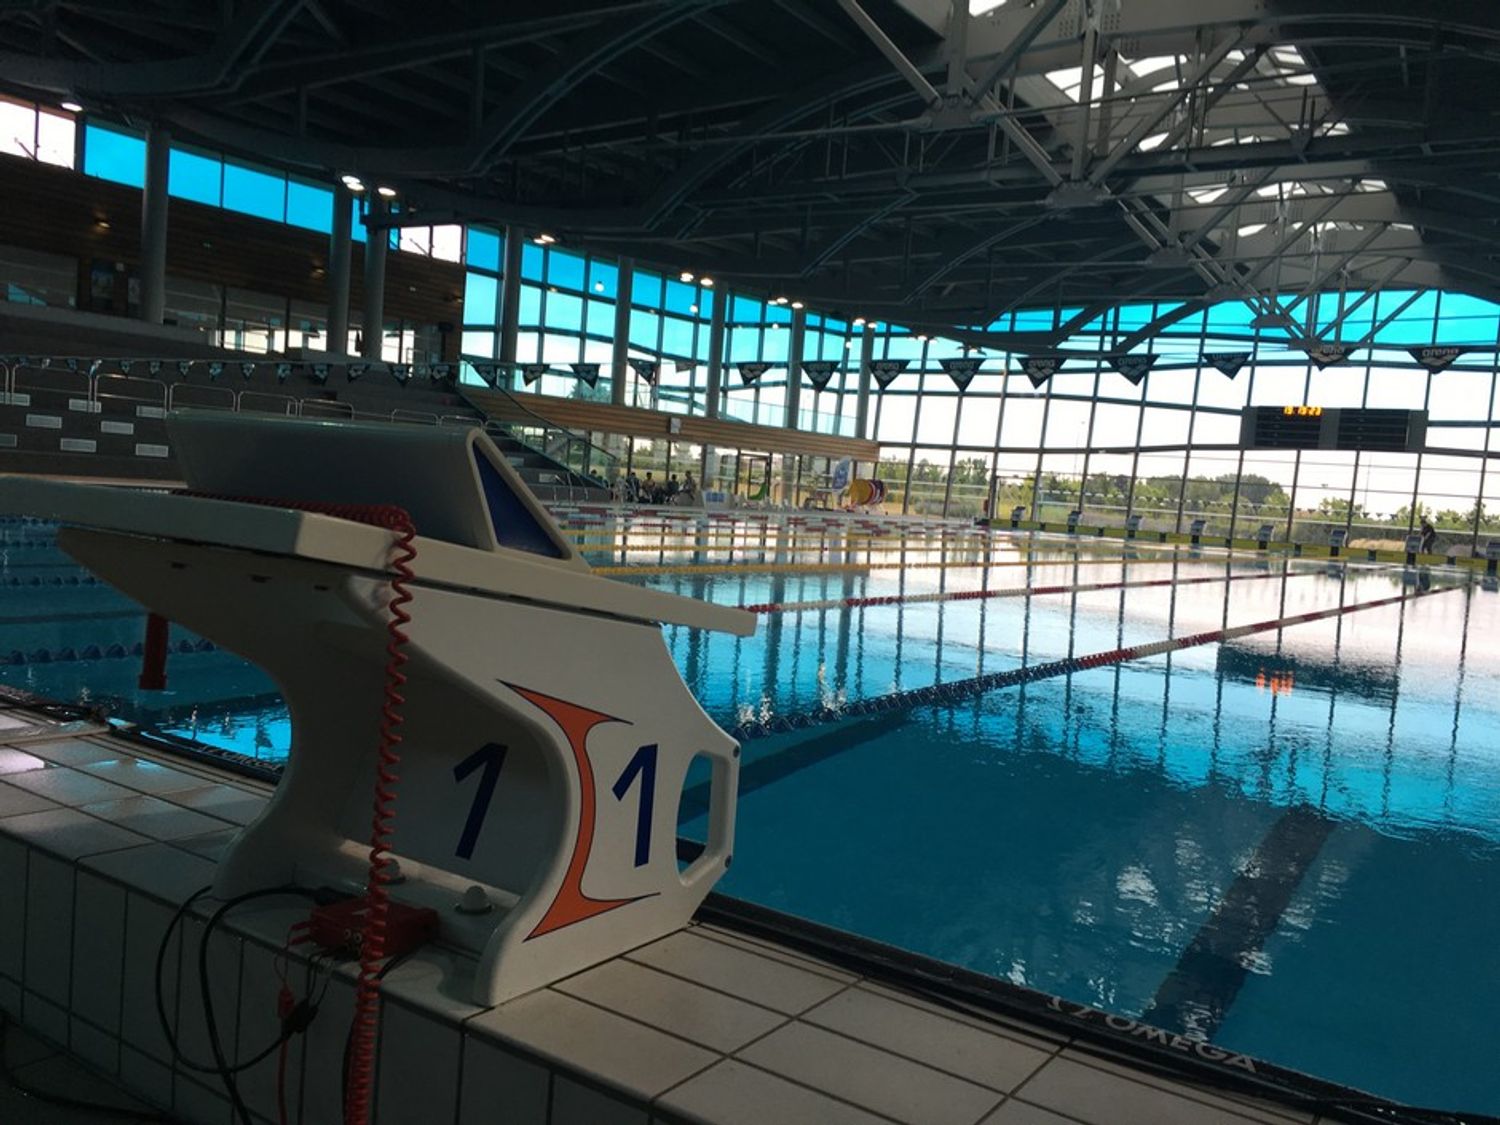 La piscine olympique de Dijon sera fermée ce week-end